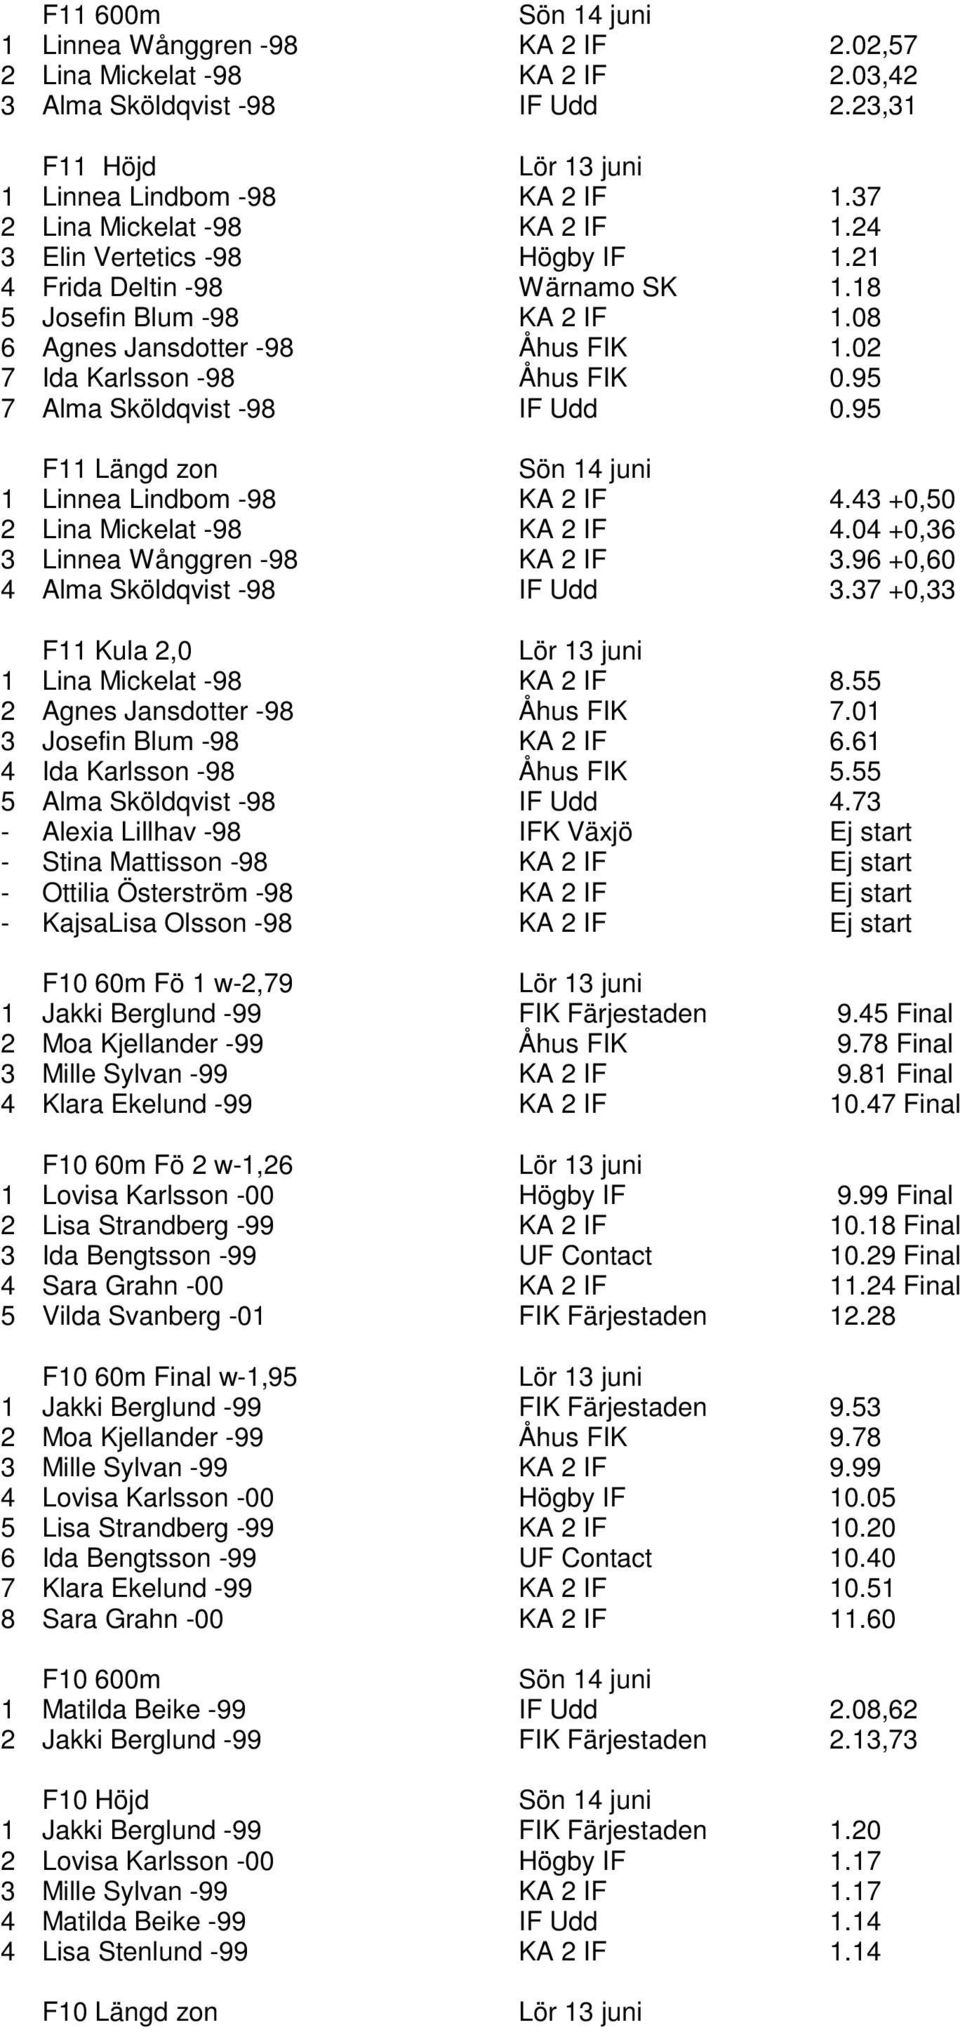 95 7 Alma Sköldqvist -98 IF Udd 0.95 F11 Längd zon 1 Linnea Lindbom -98 KA 2 IF 4.43 +0,50 2 Lina Mickelat -98 KA 2 IF 4.04 +0,36 3 Linnea Wånggren -98 KA 2 IF 3.